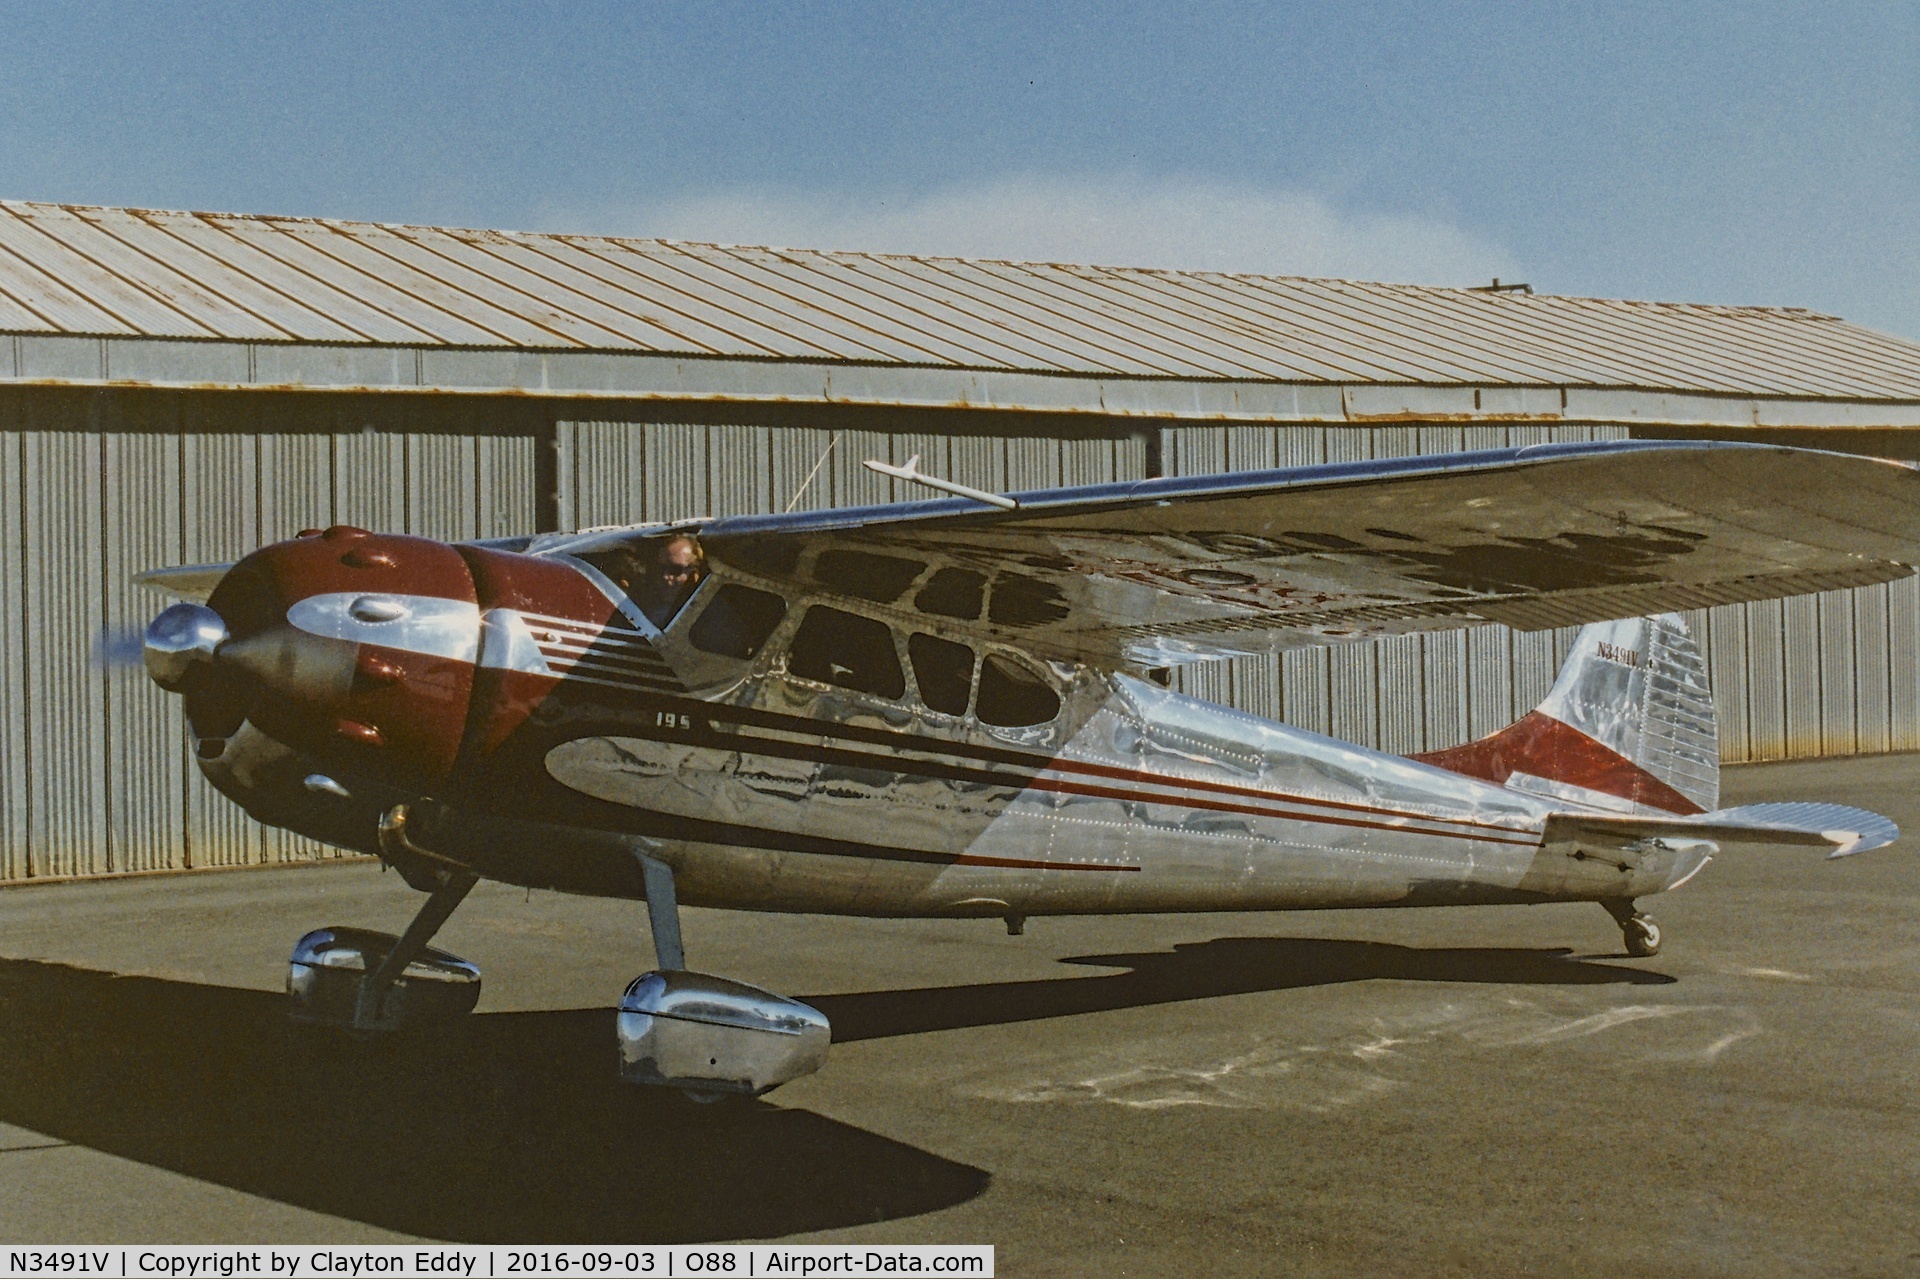 N3491V, 1948 Cessna 195 C/N 7195, N3491V at the old Rio Vista Airport in California.